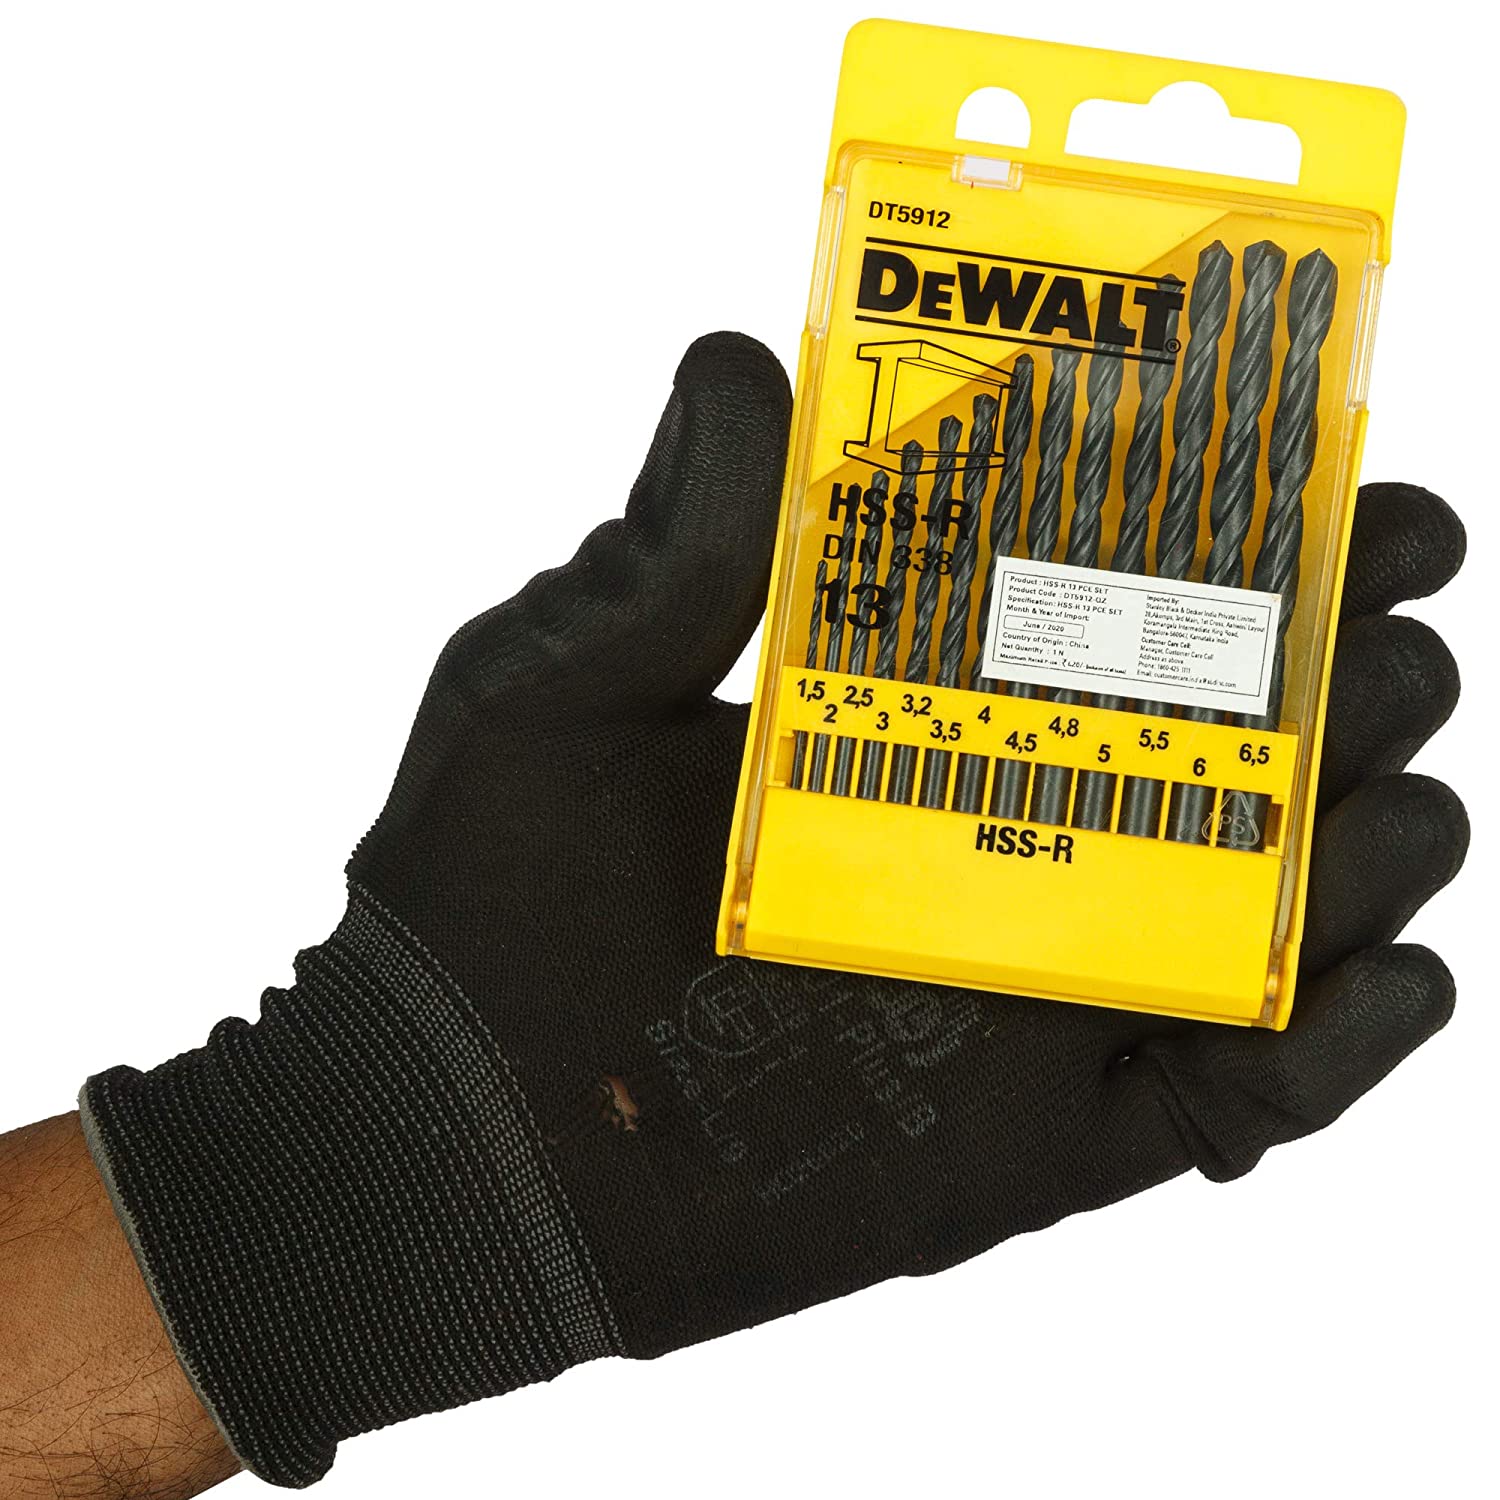 DEWALT DT5912-QZ HSS 1.5mm/2mm/2.5mm/3mm/3.2mm/3.5mm/4mm/4.5mm/4.8mm/5mm/5.5mm/6mm/6.5mm Metal Drill Bit Set (Pack of 13